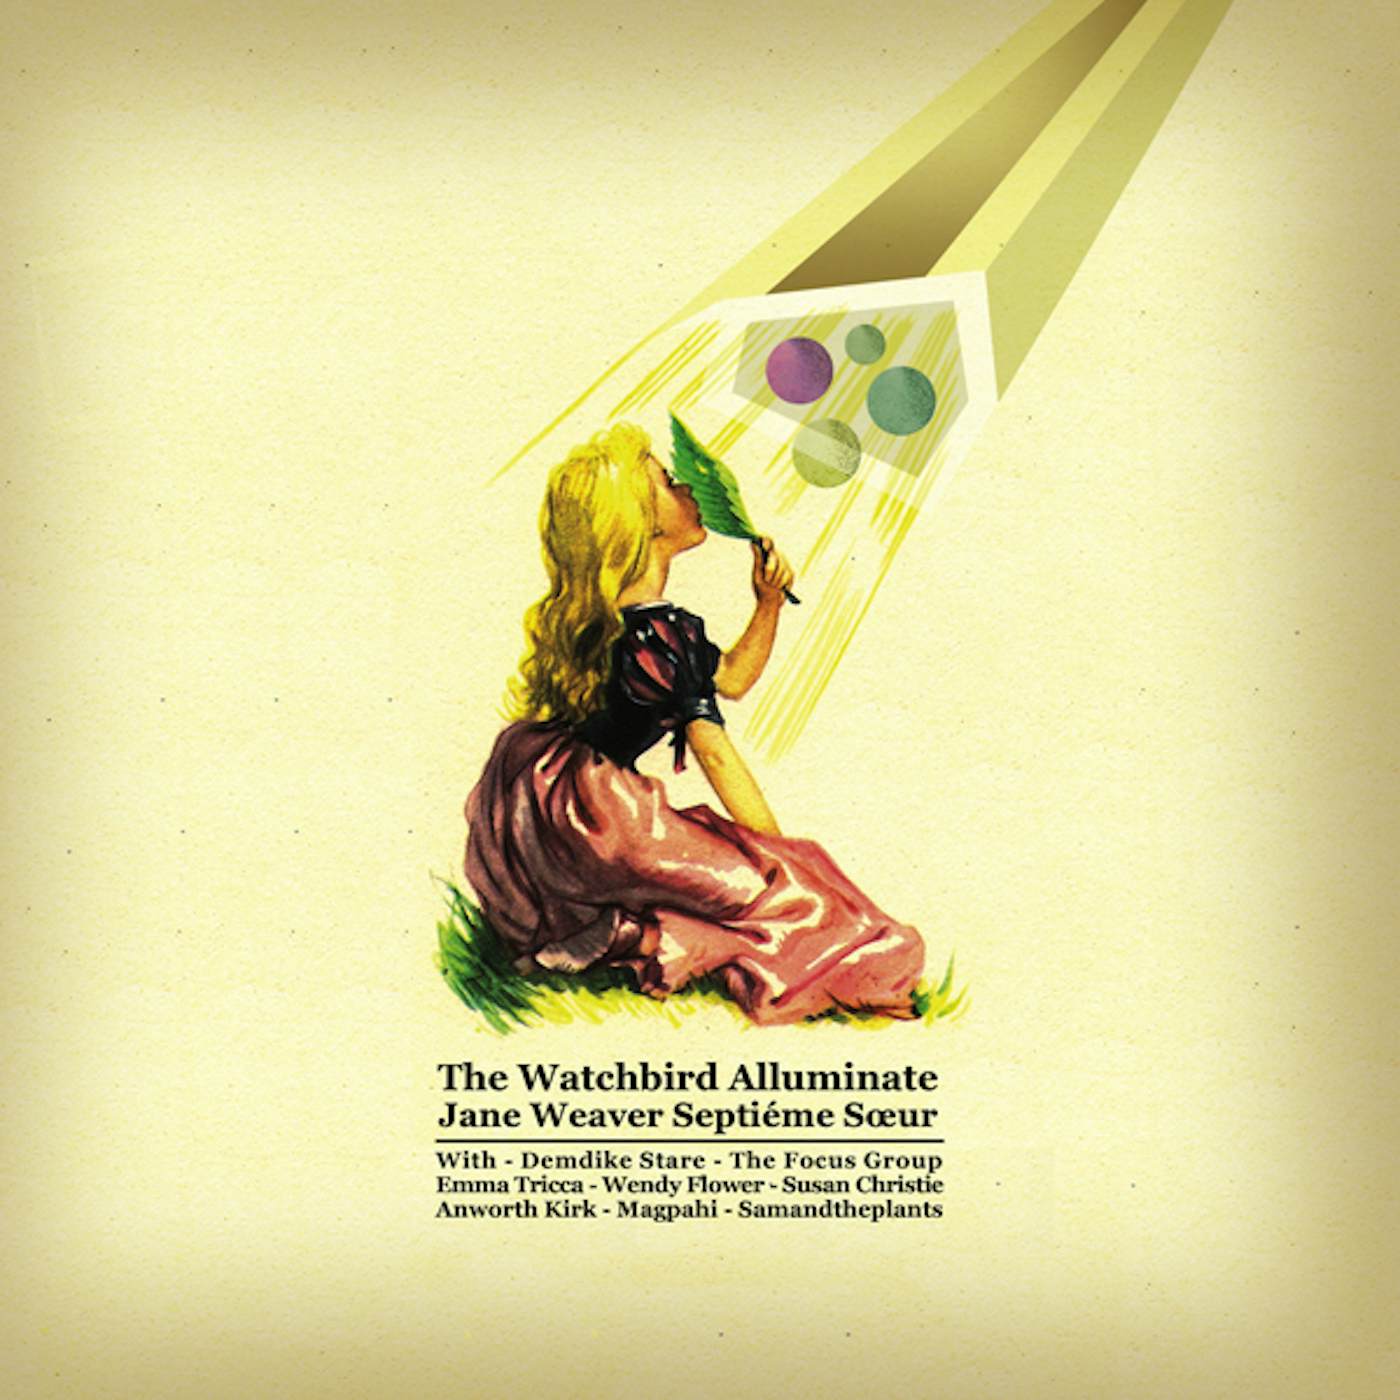 Jane Weaver WATCHBIRD ALLUMINATE CD